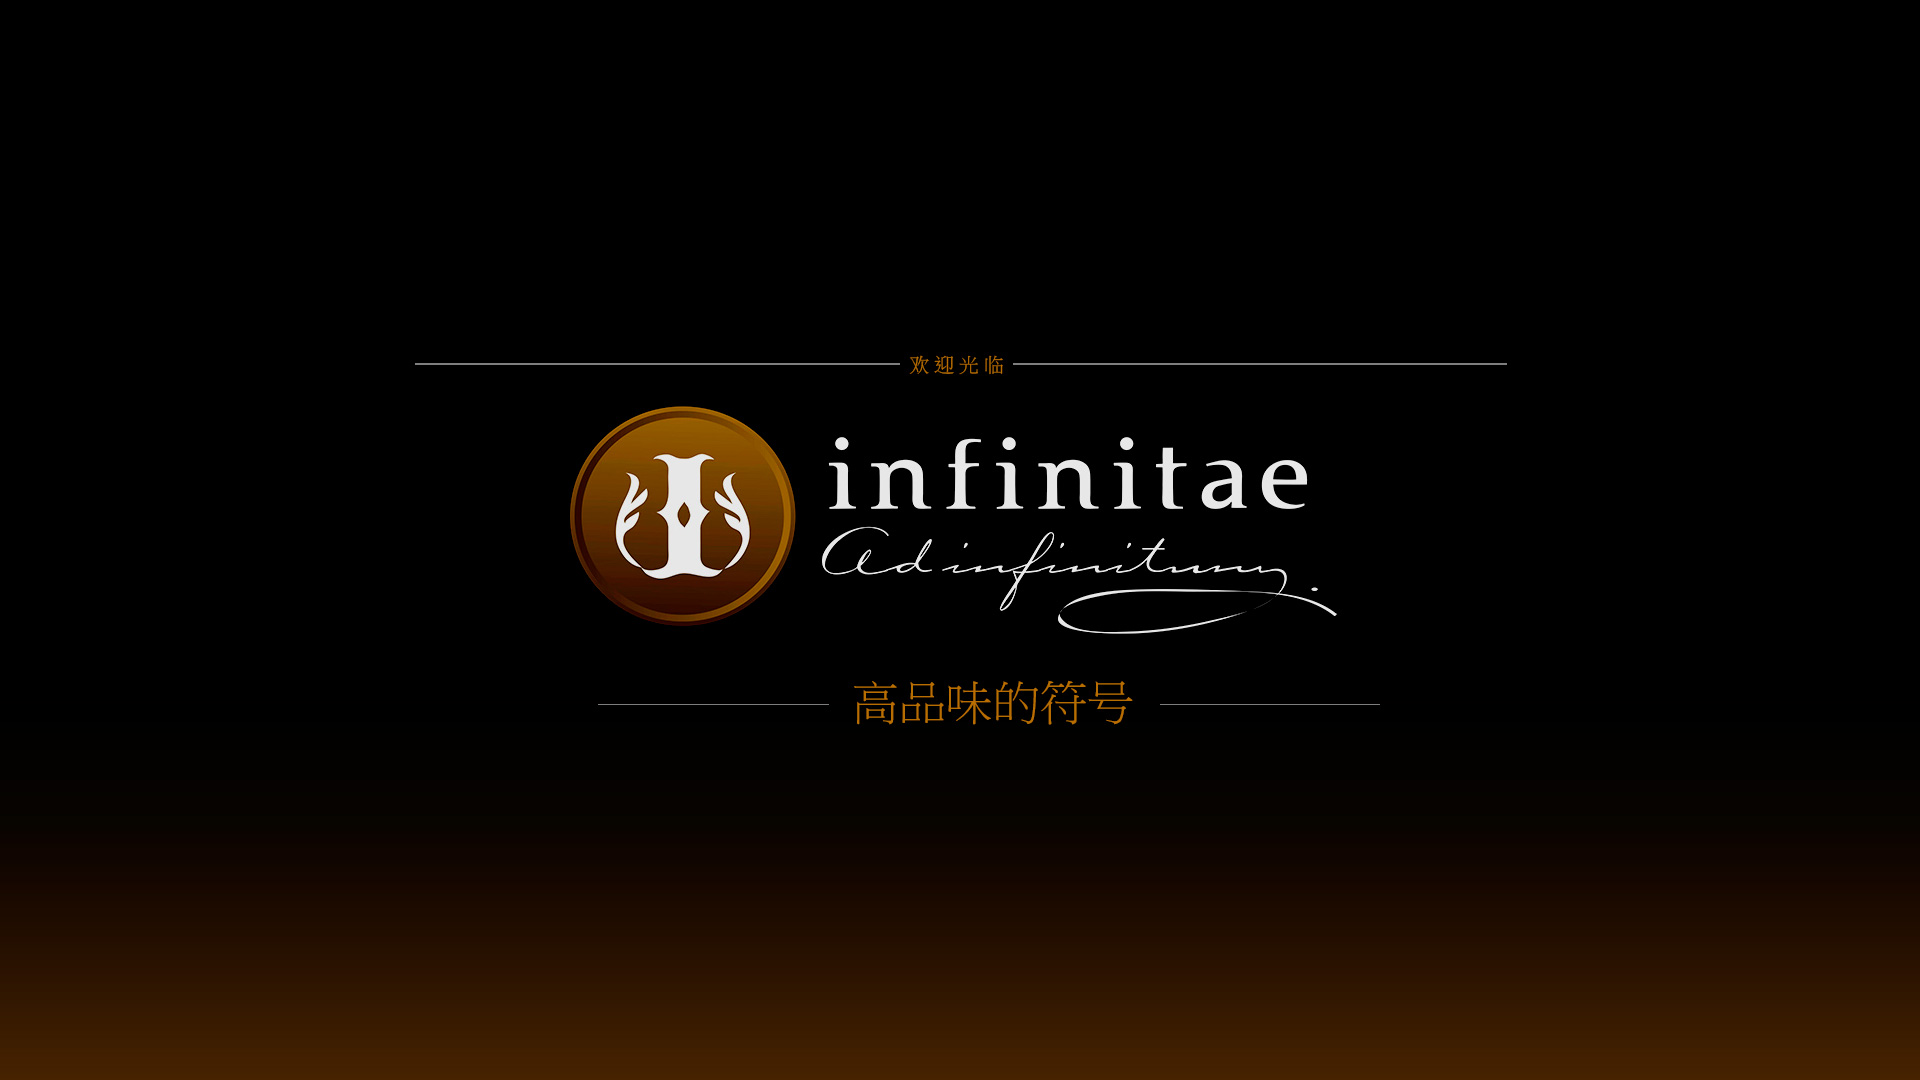 Infinitae